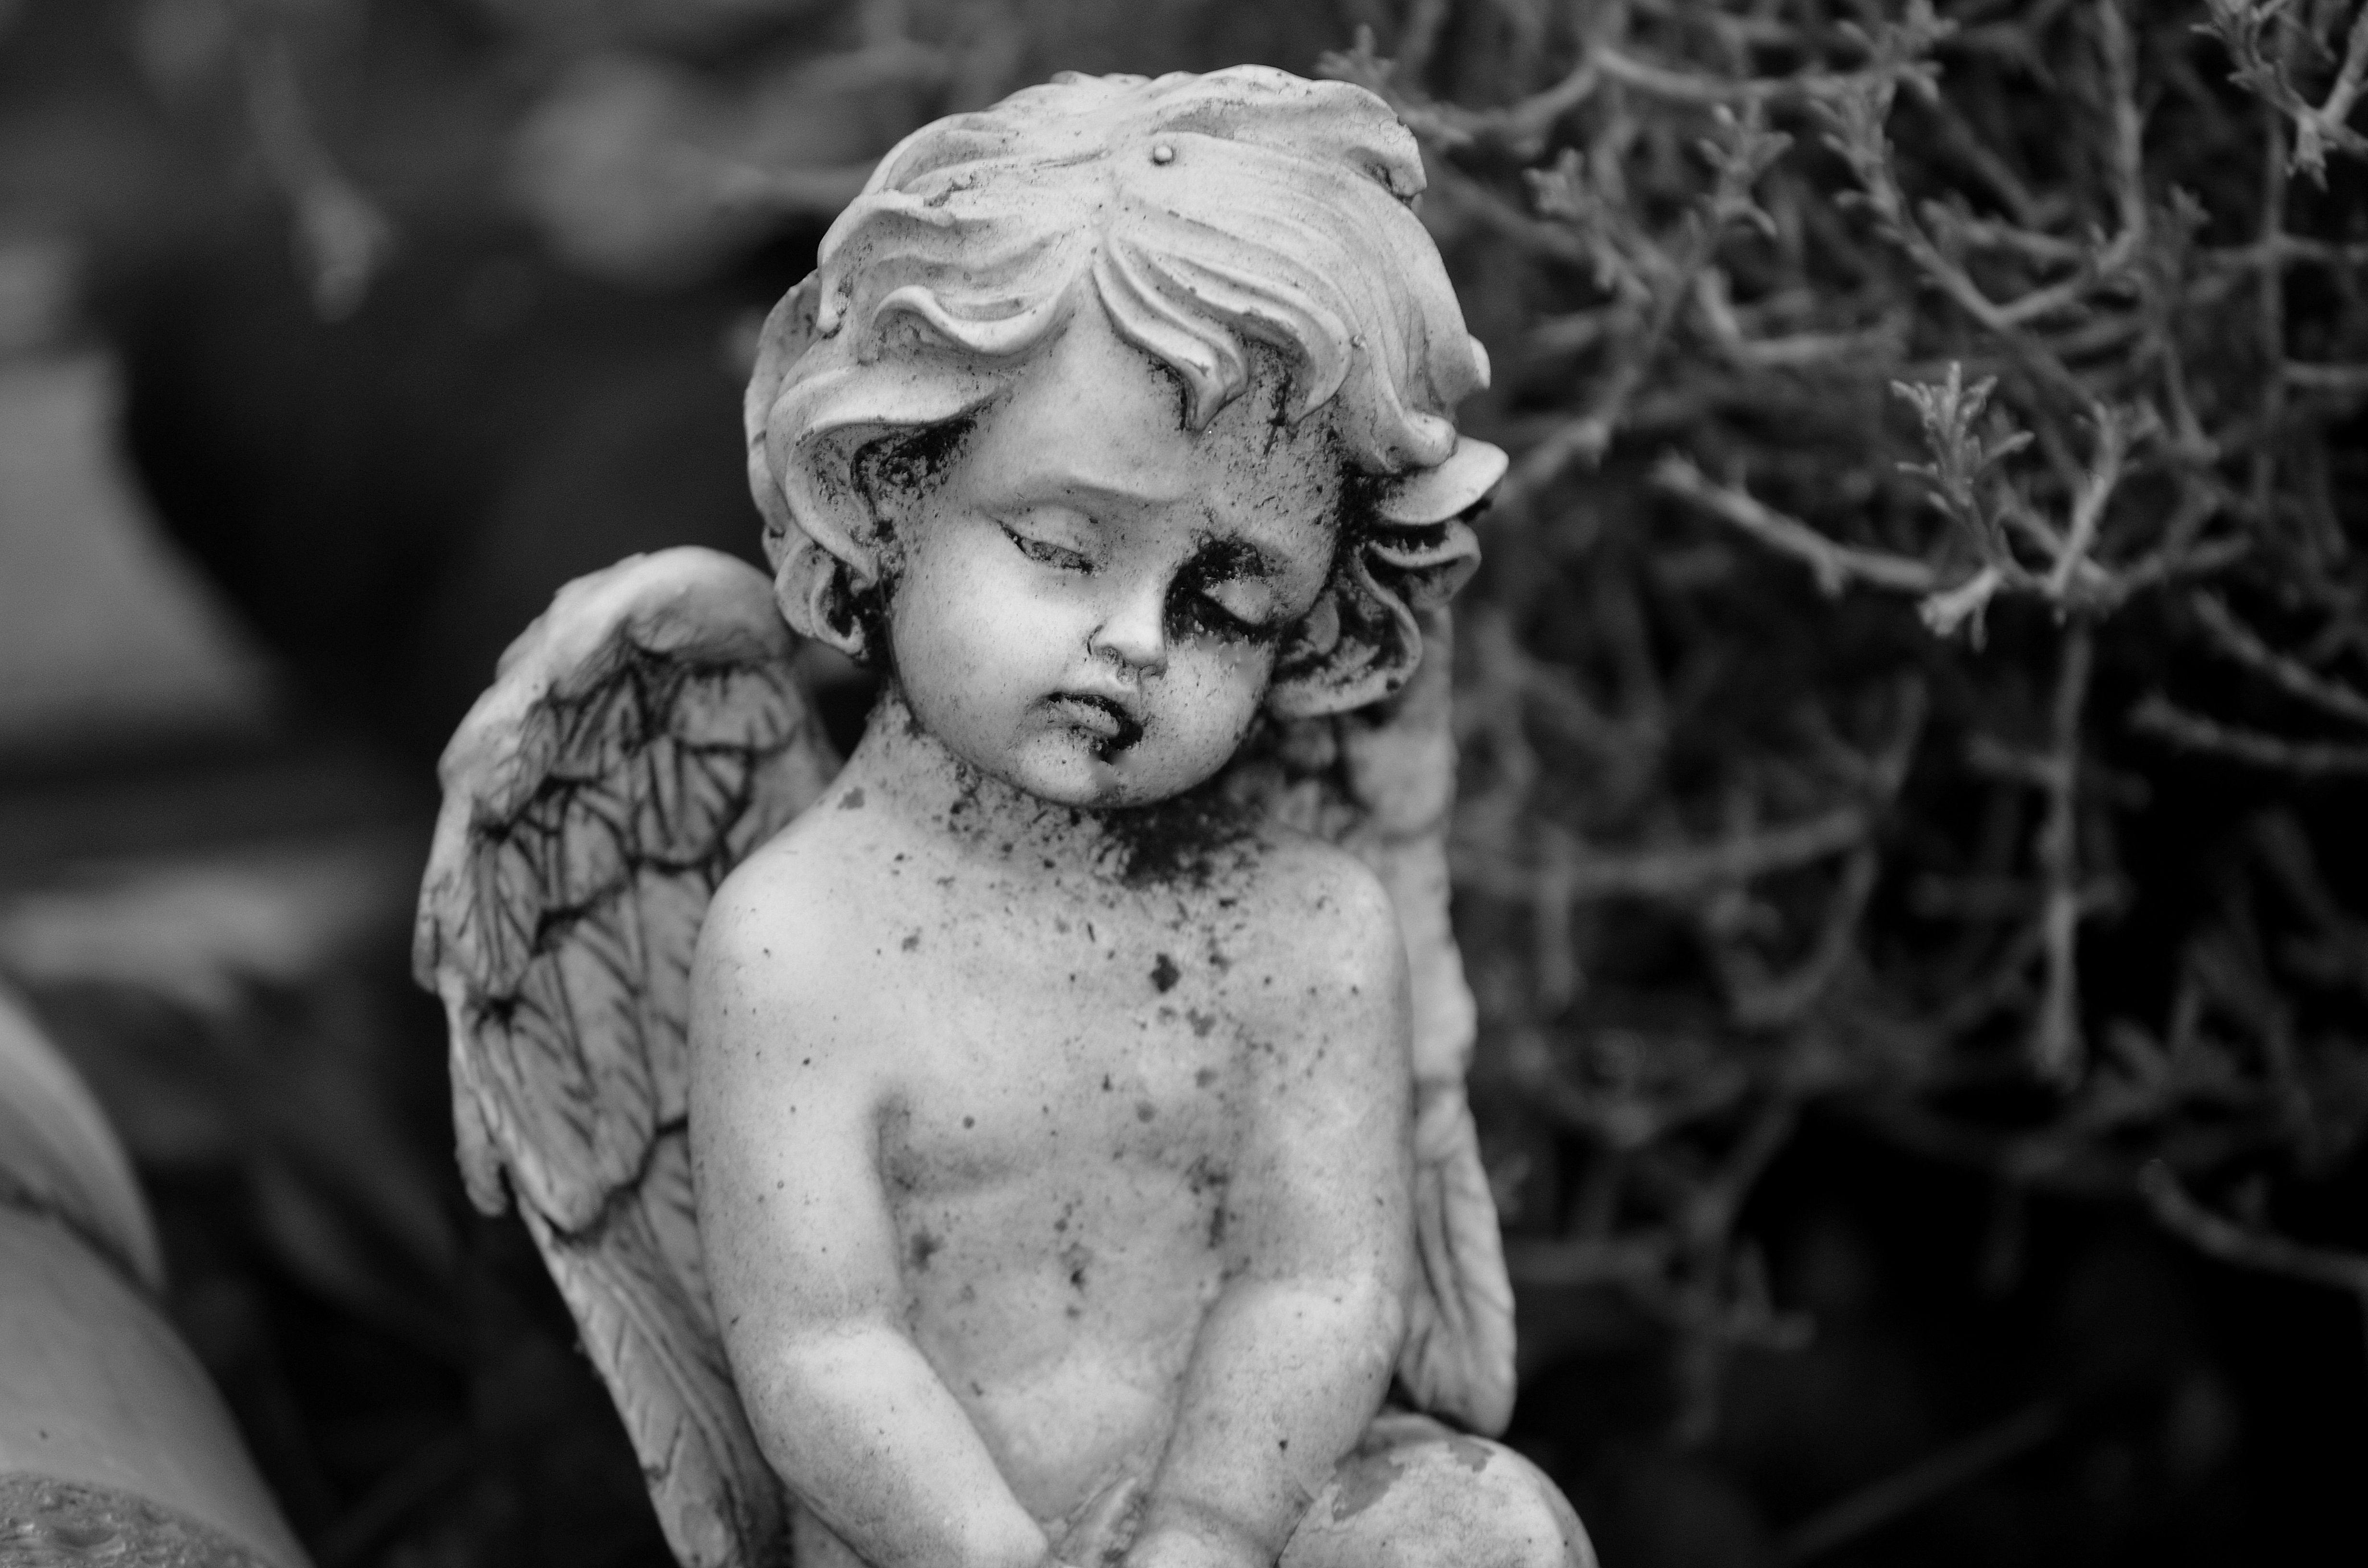 White Ceramic Figurine of Angel Illustration · Free Stock Photo